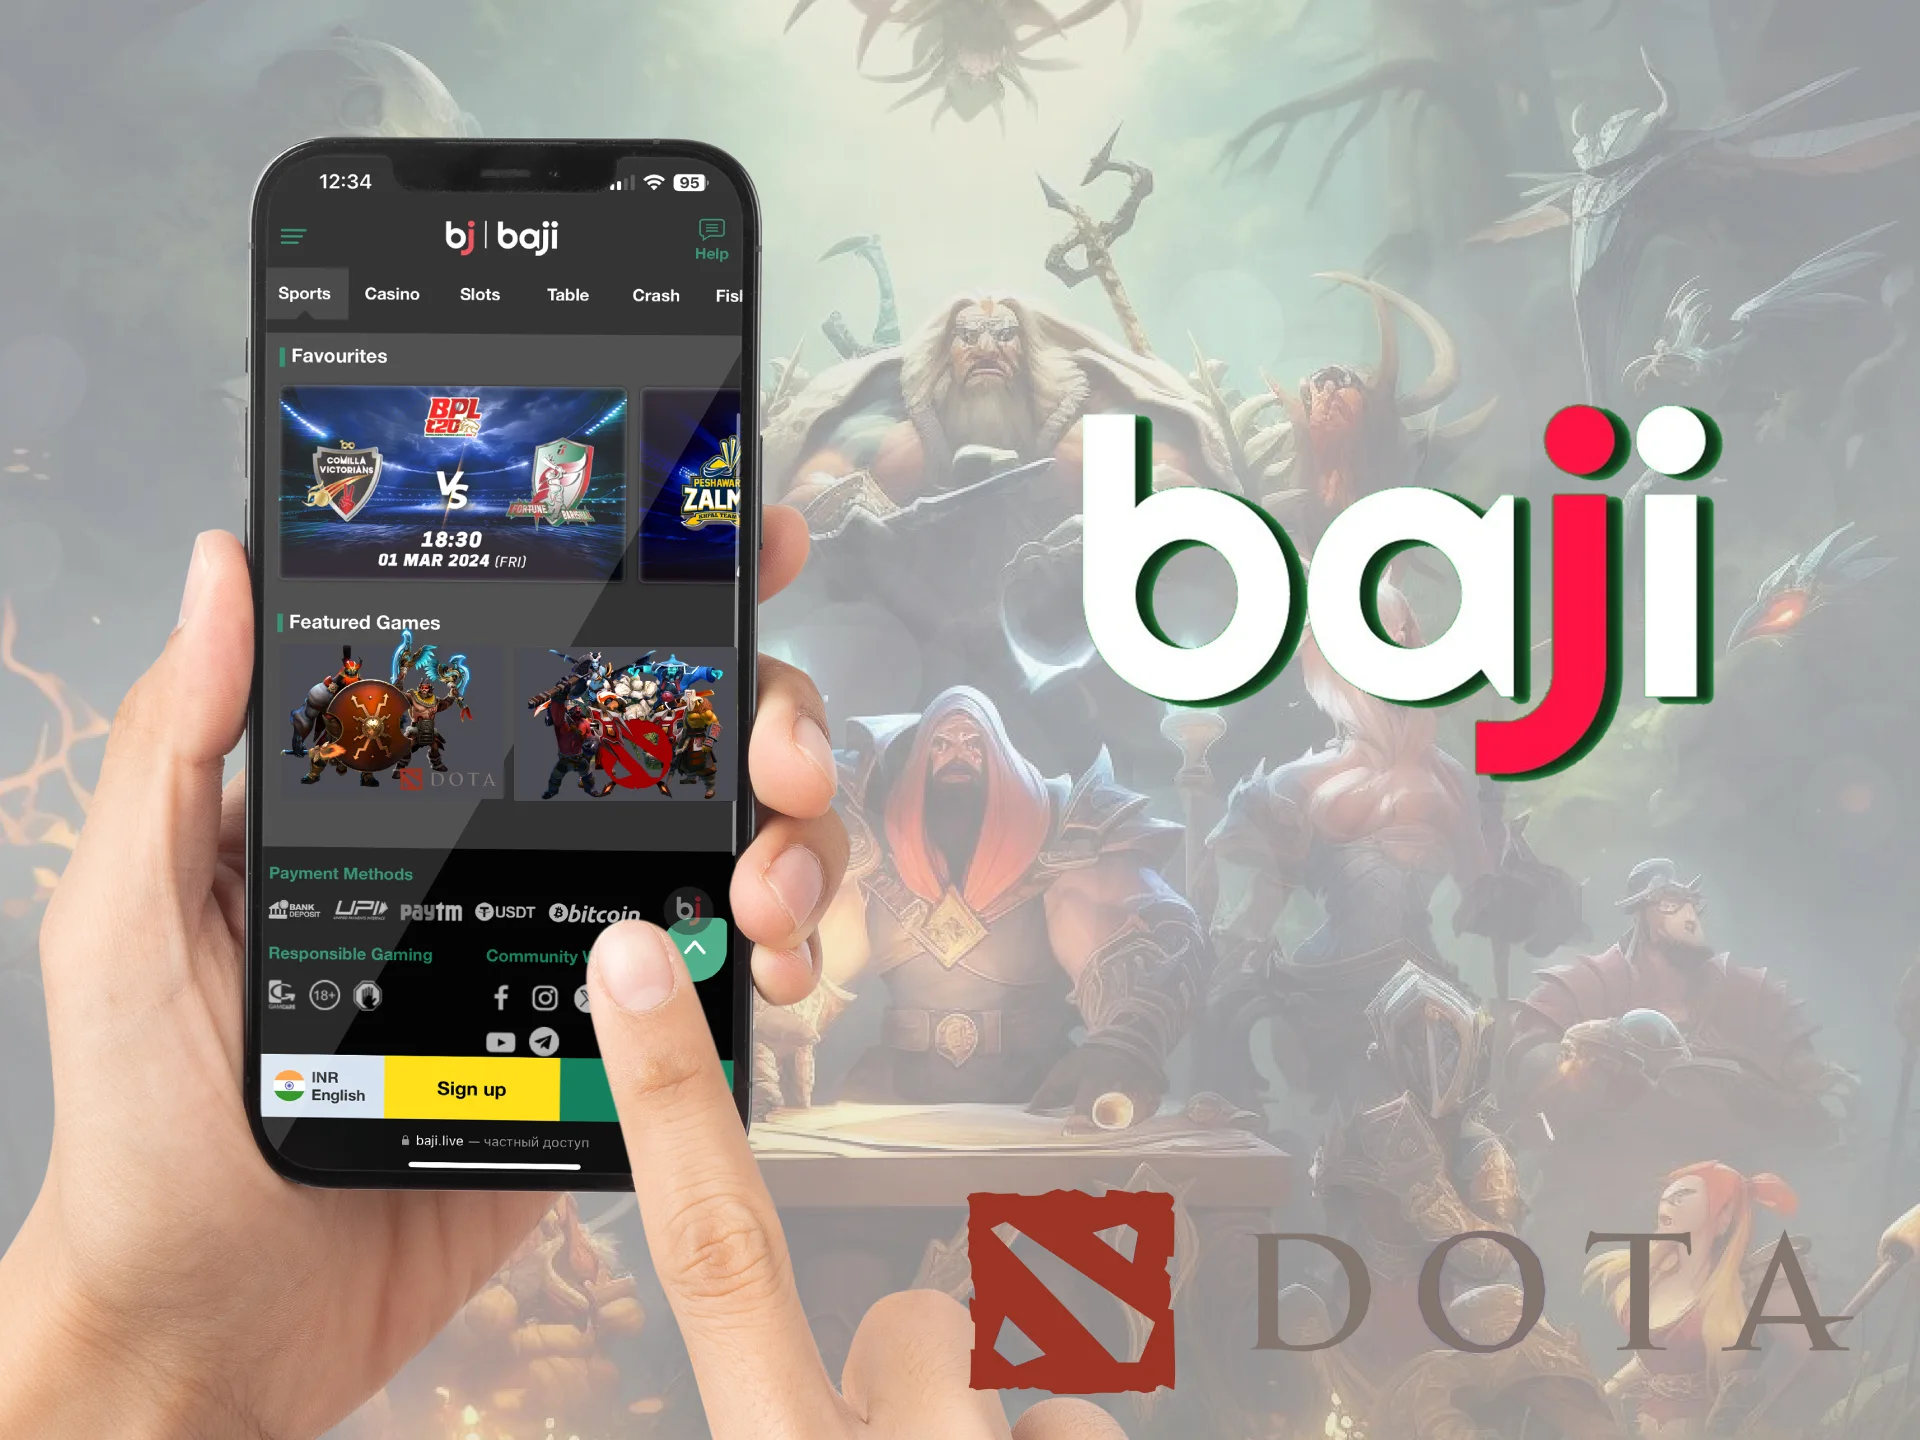 Bet on Dota 2 anywhere on the Baji Live app.